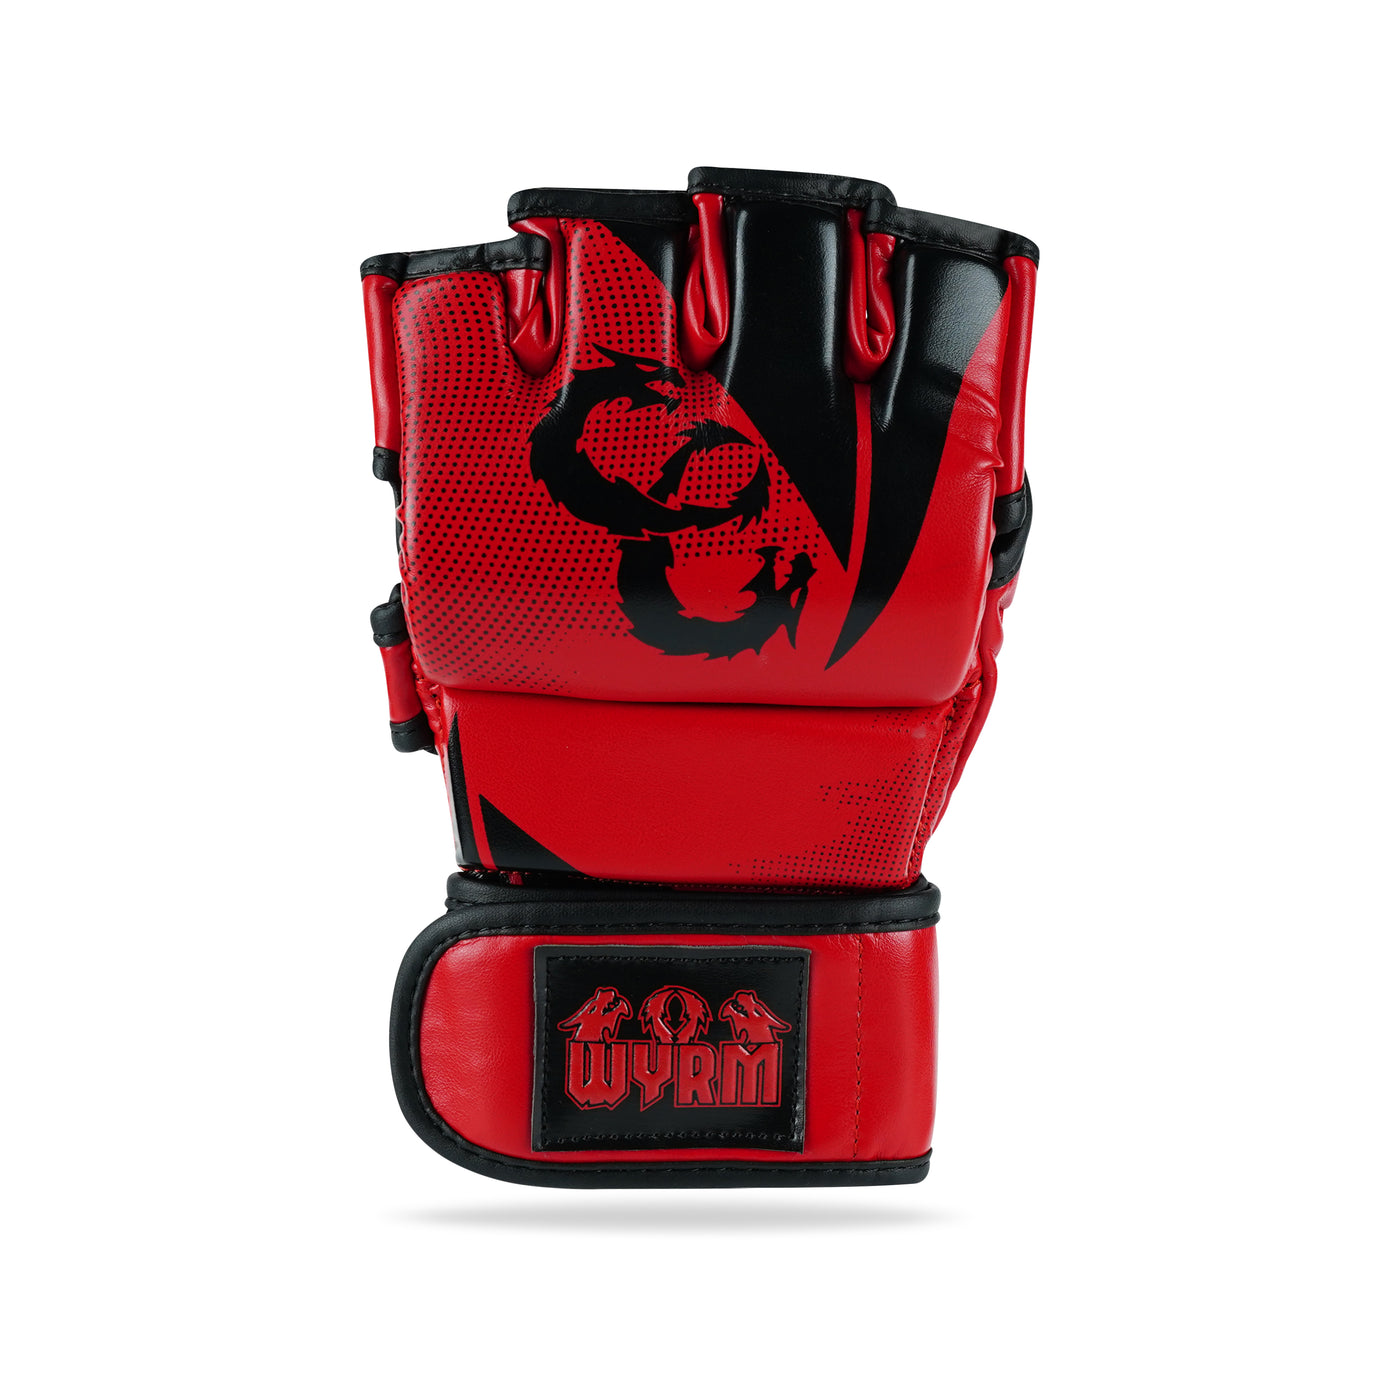 Krusher Red MMA Fight Gloves